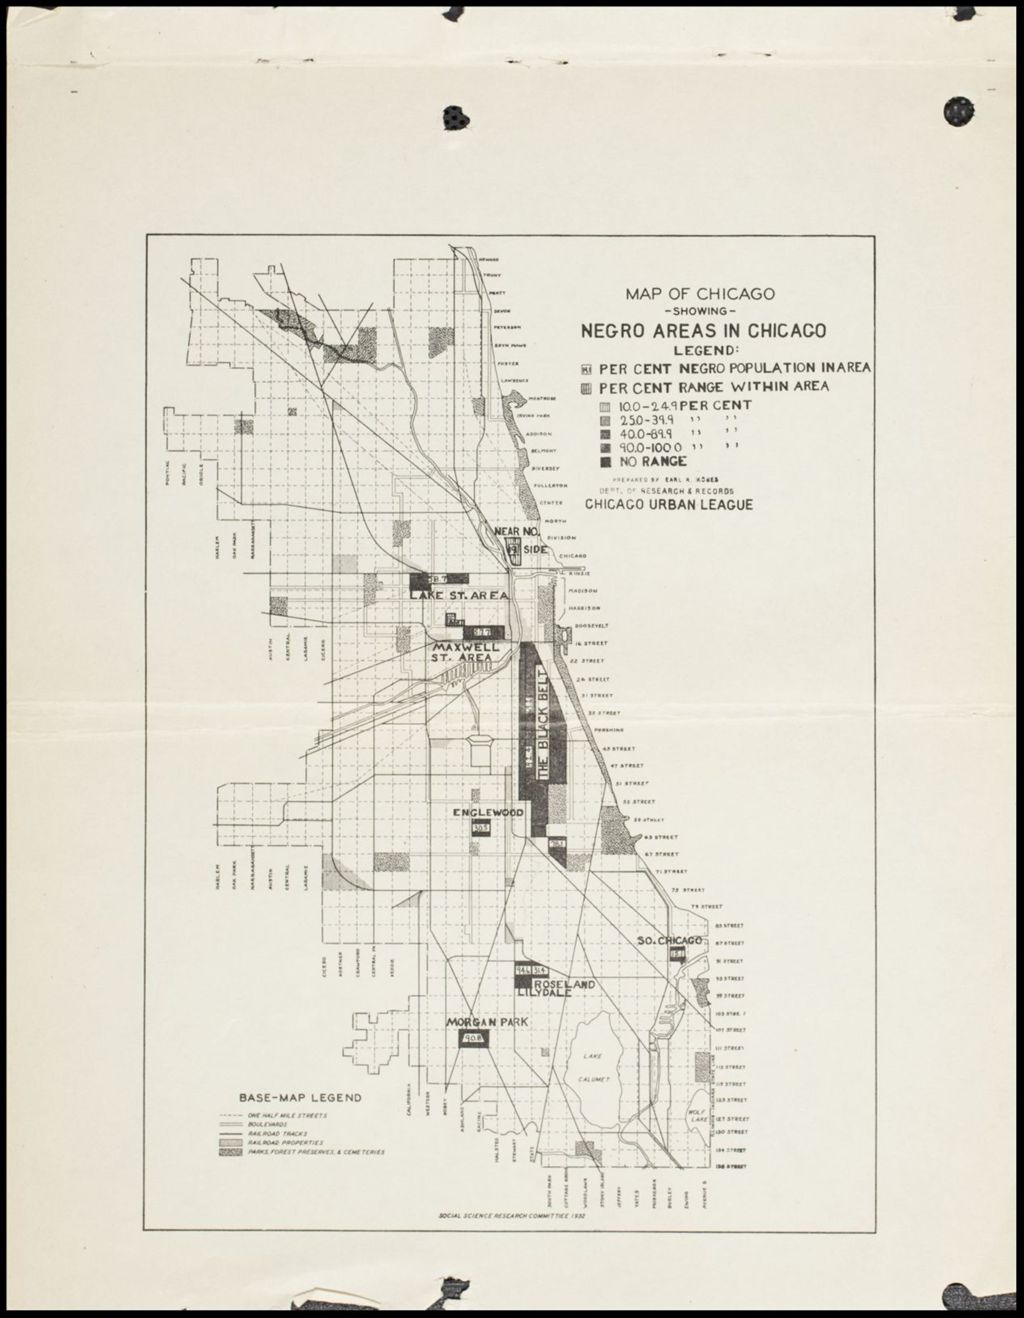 Miniature of Chicago Urban League report, 1932 (Folder I-10)